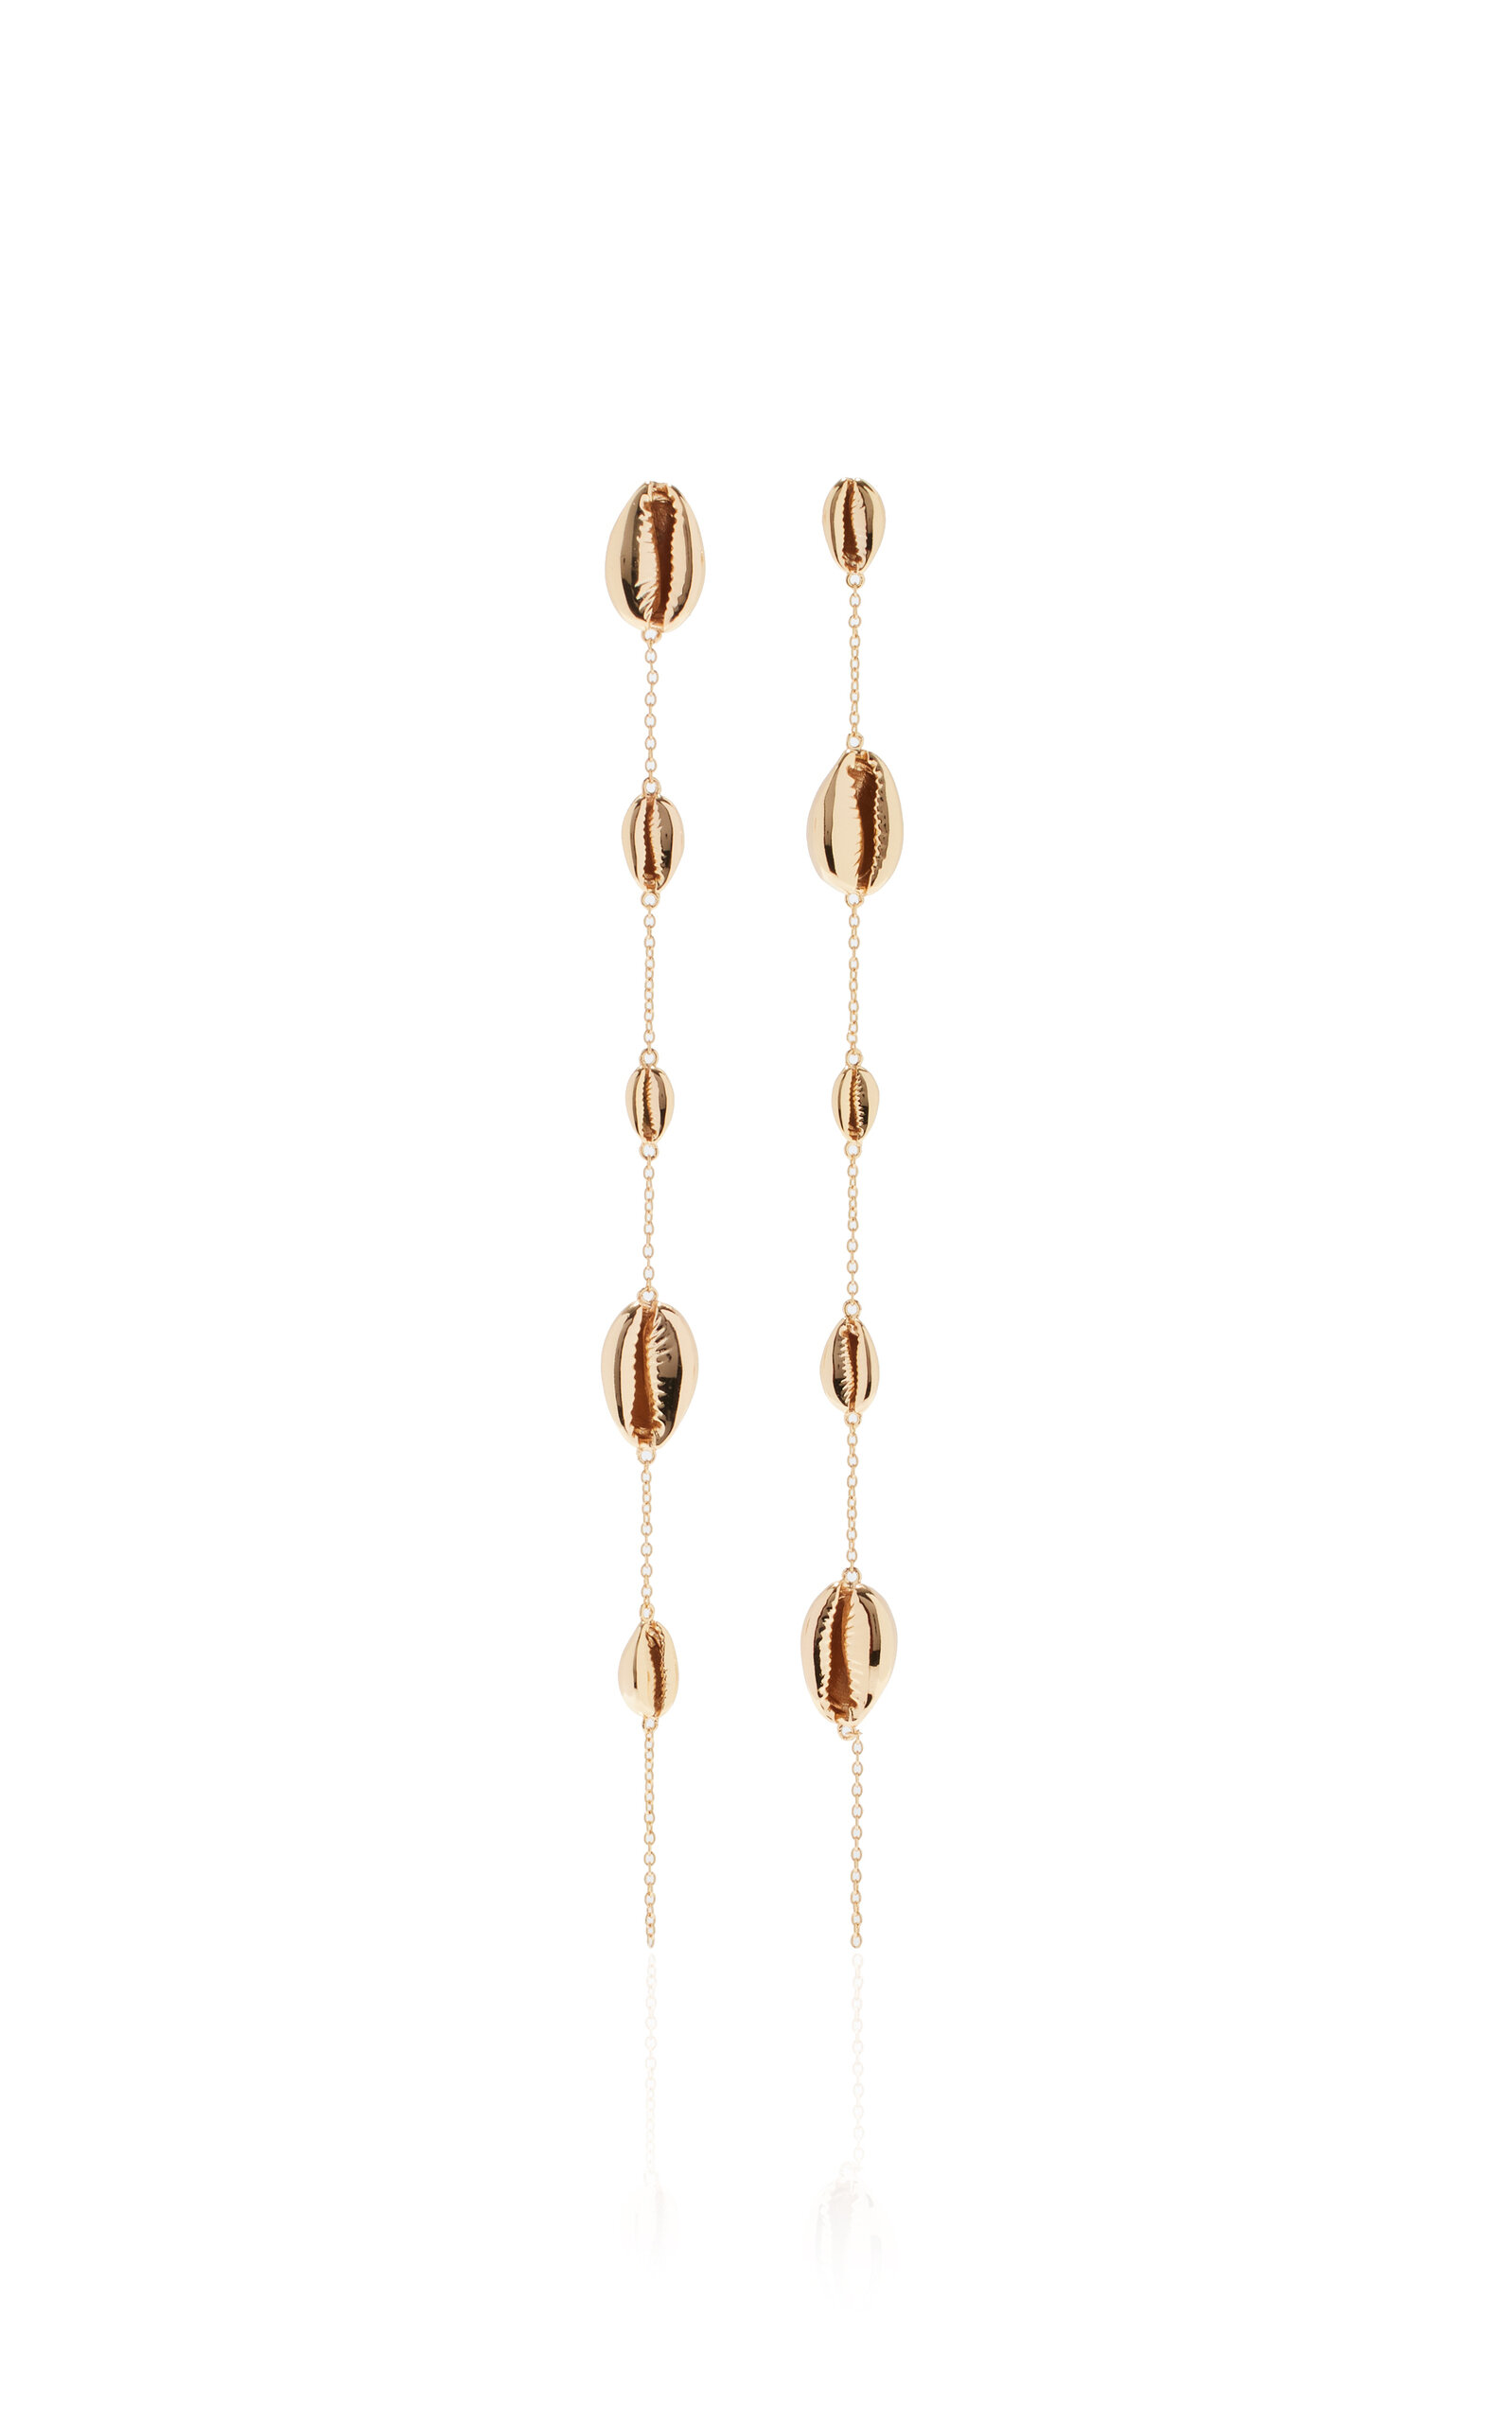 Cult Gaia - Myrna Seashell Brass Drop Earrings - Gold - OS - Moda Operandi - Gifts For Her